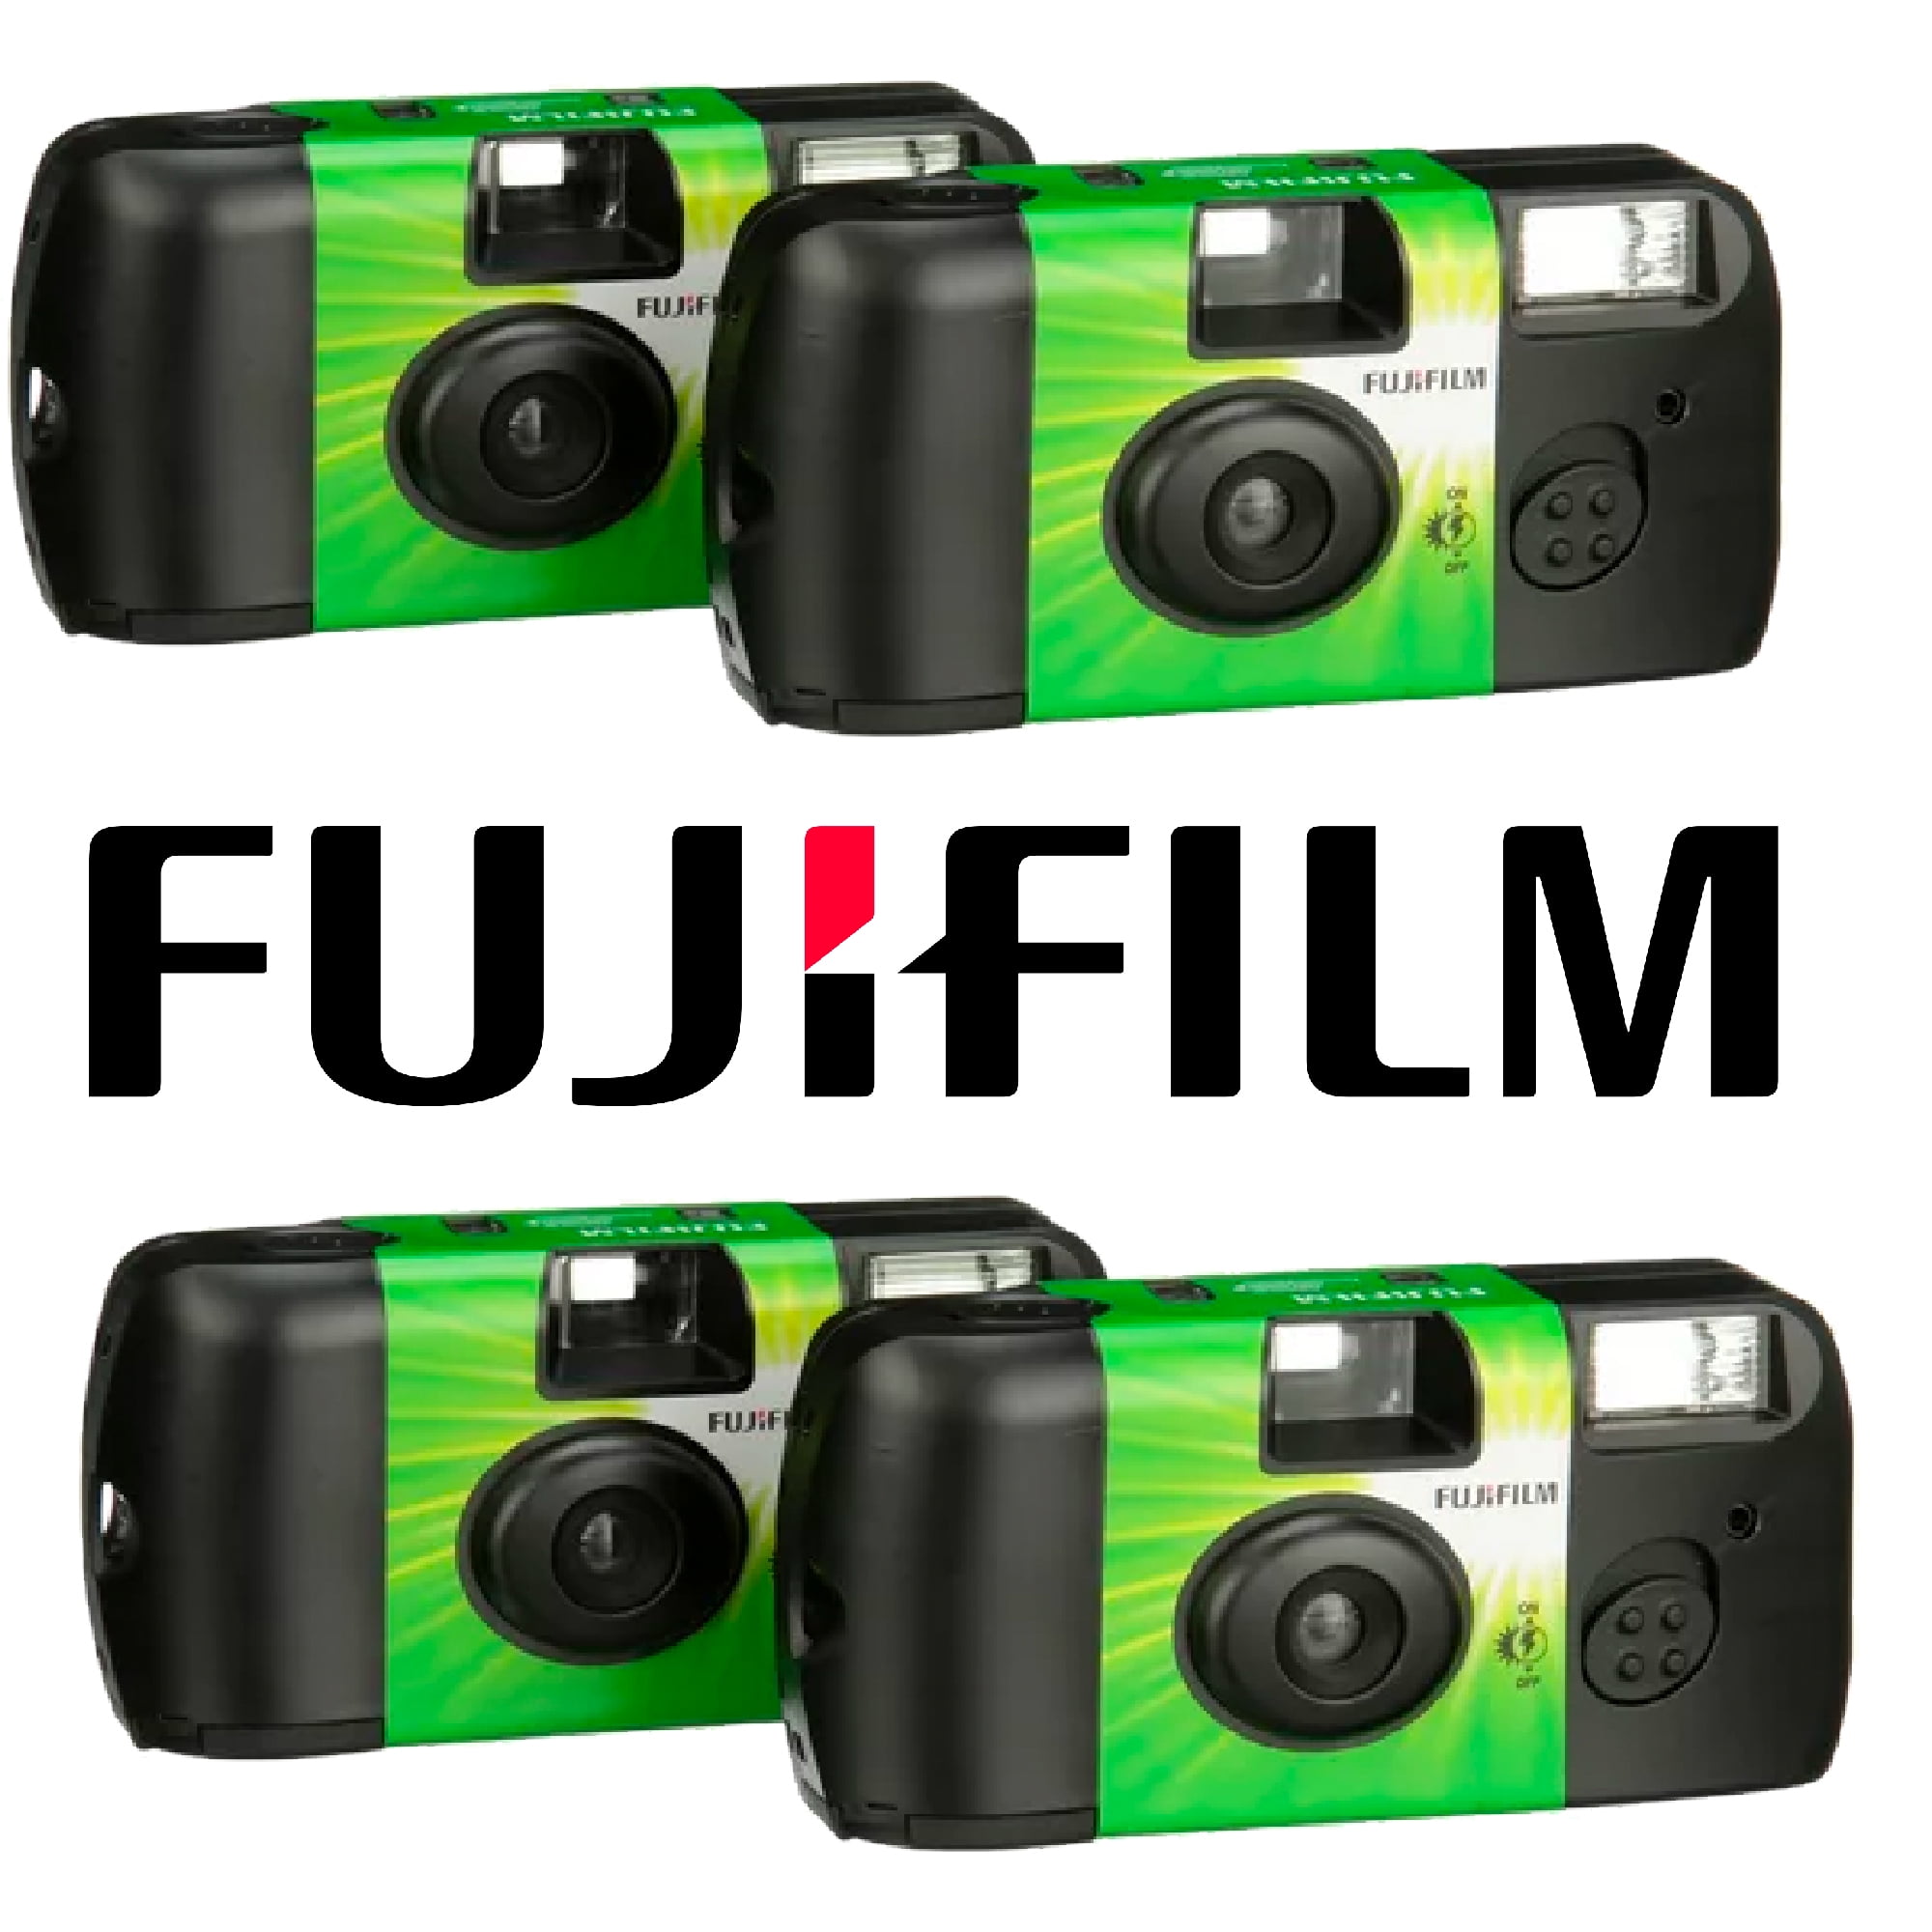 Fujifilm - Quicksnap Flash 400 Twin Pack – eComm Solutions LLC